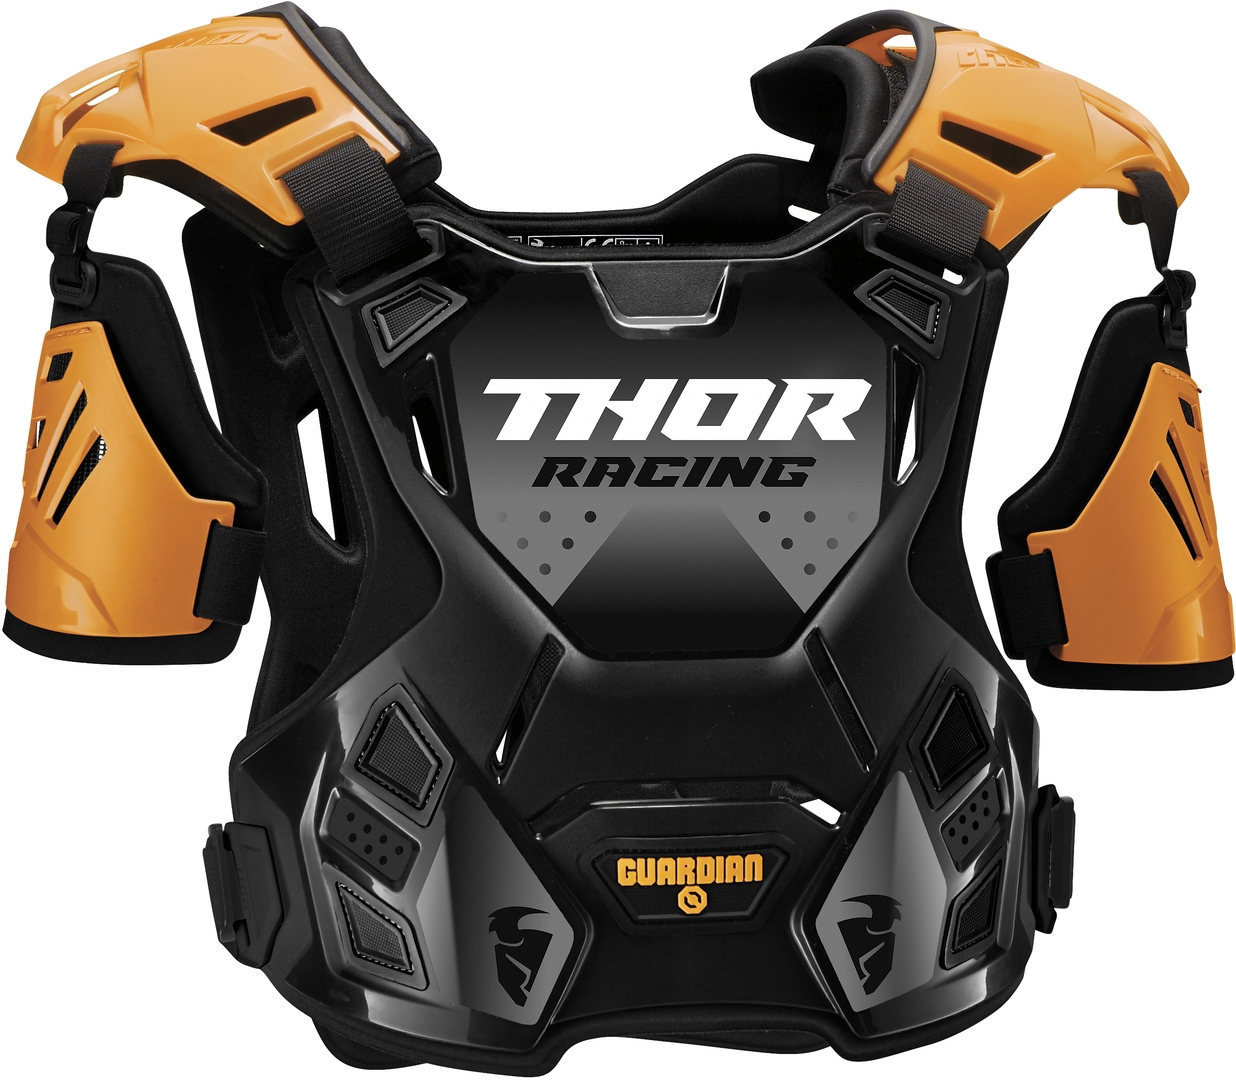 Thor Guardian Brustprotektor, schwarz-orange, Größe M L, schwarz-orange, Größe M L